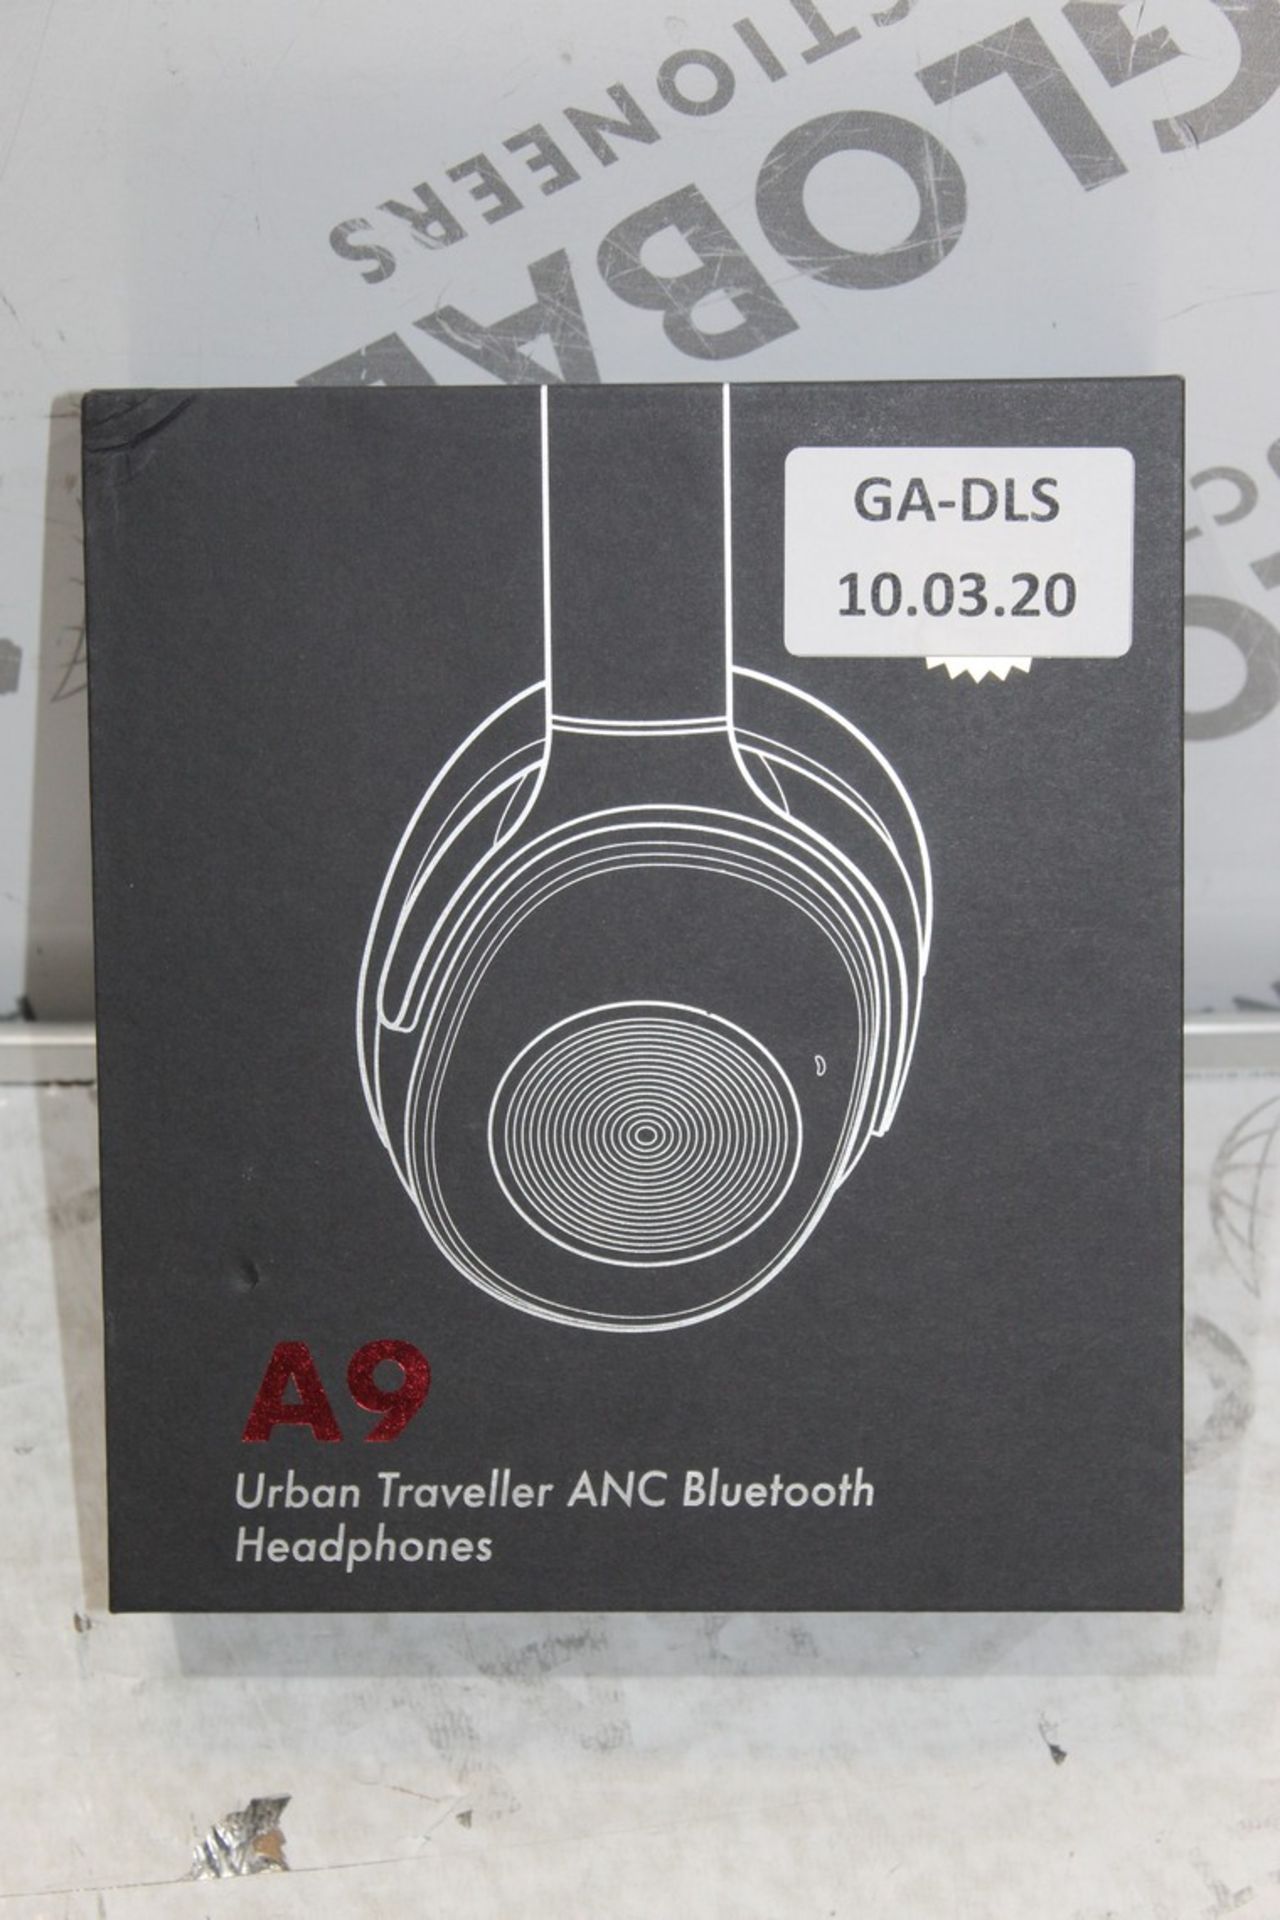 Boxed Pair A9 Urban Traveller AMC Bluetooth Headphones RRP £55